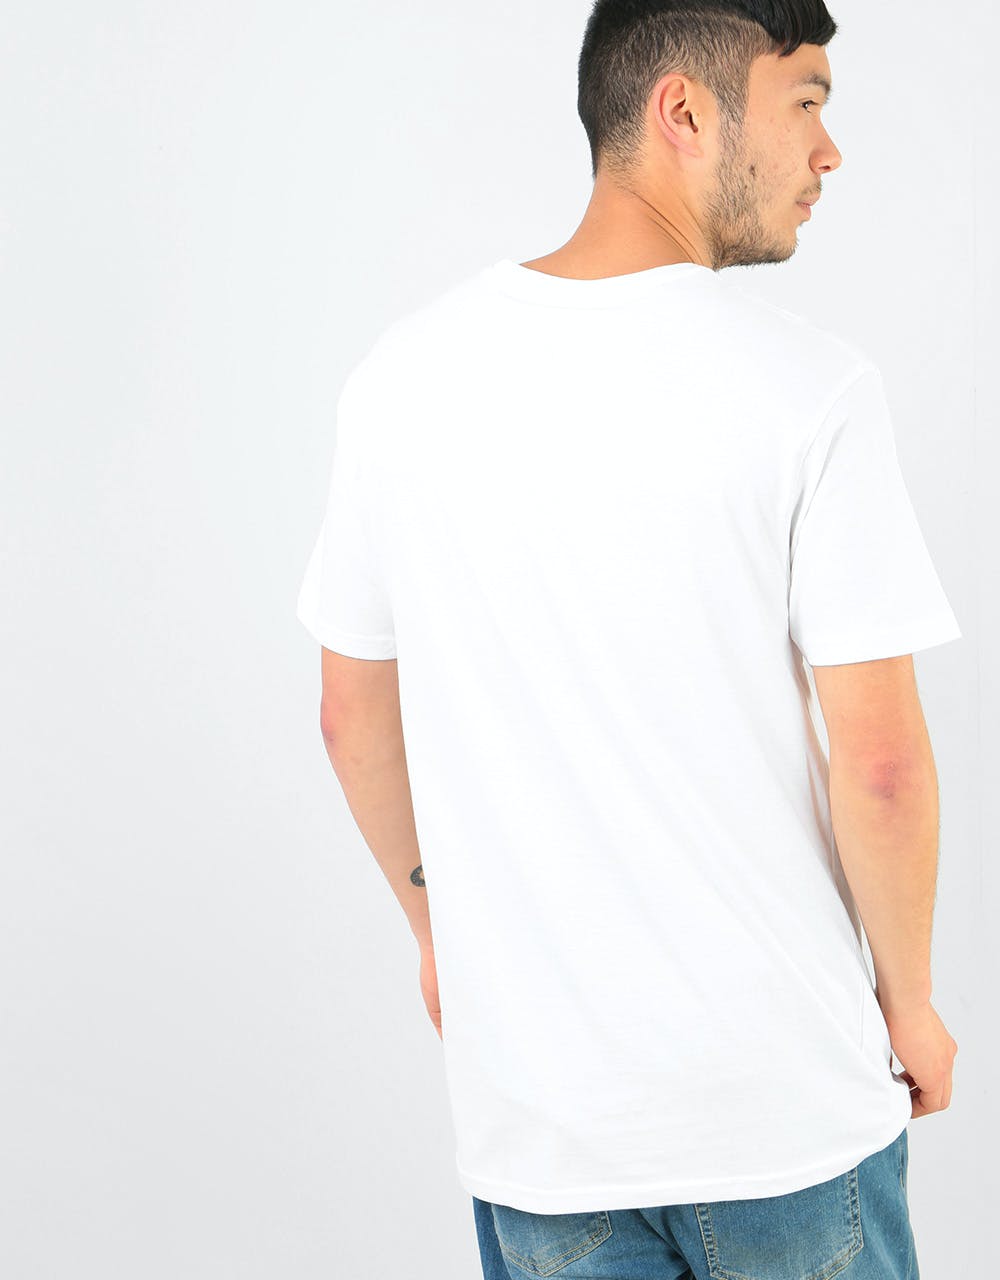 Body Glove Cut Out T-Shirt - White